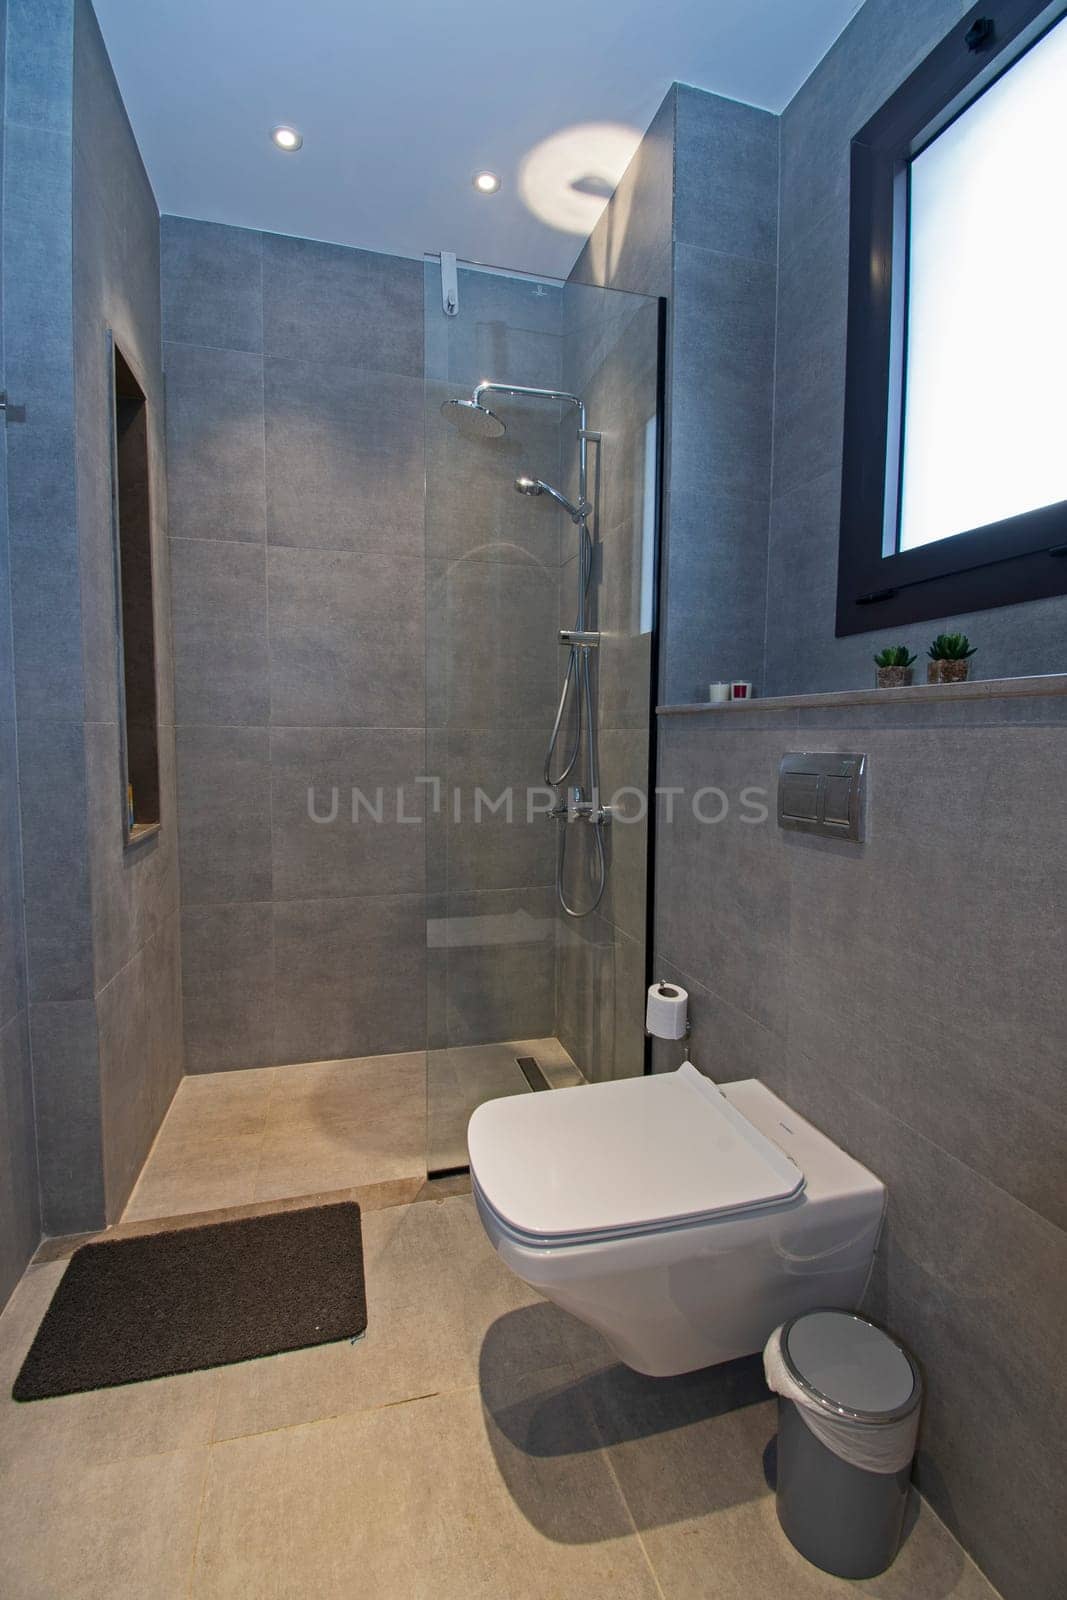 Interior design of bathroom in luxury apartment by paulvinten